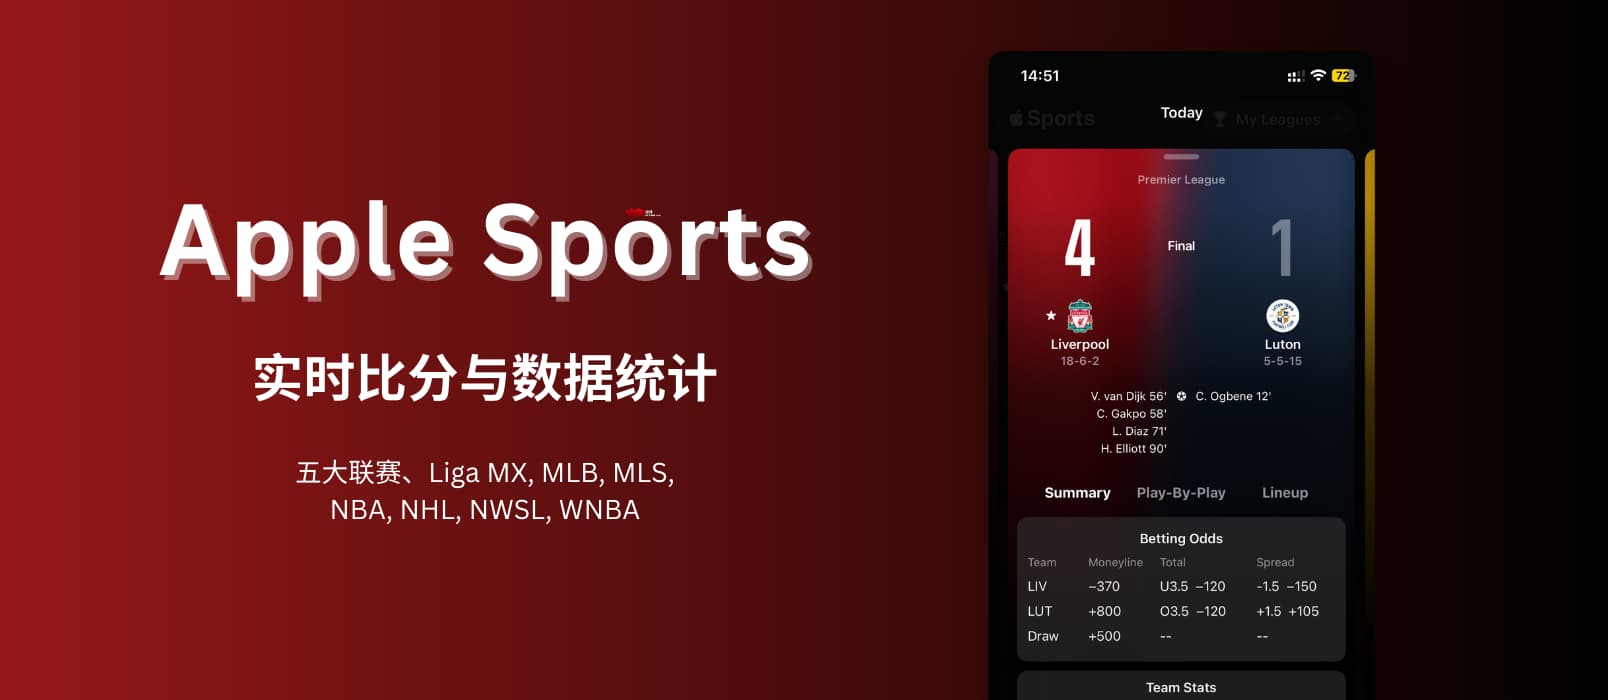 Apple Sports 发布，追踪实时你喜爱的球队和联赛比分和统计数据，包括五大联赛、NBA、MLB、MLS 等，无国内联赛[iPhone] 1